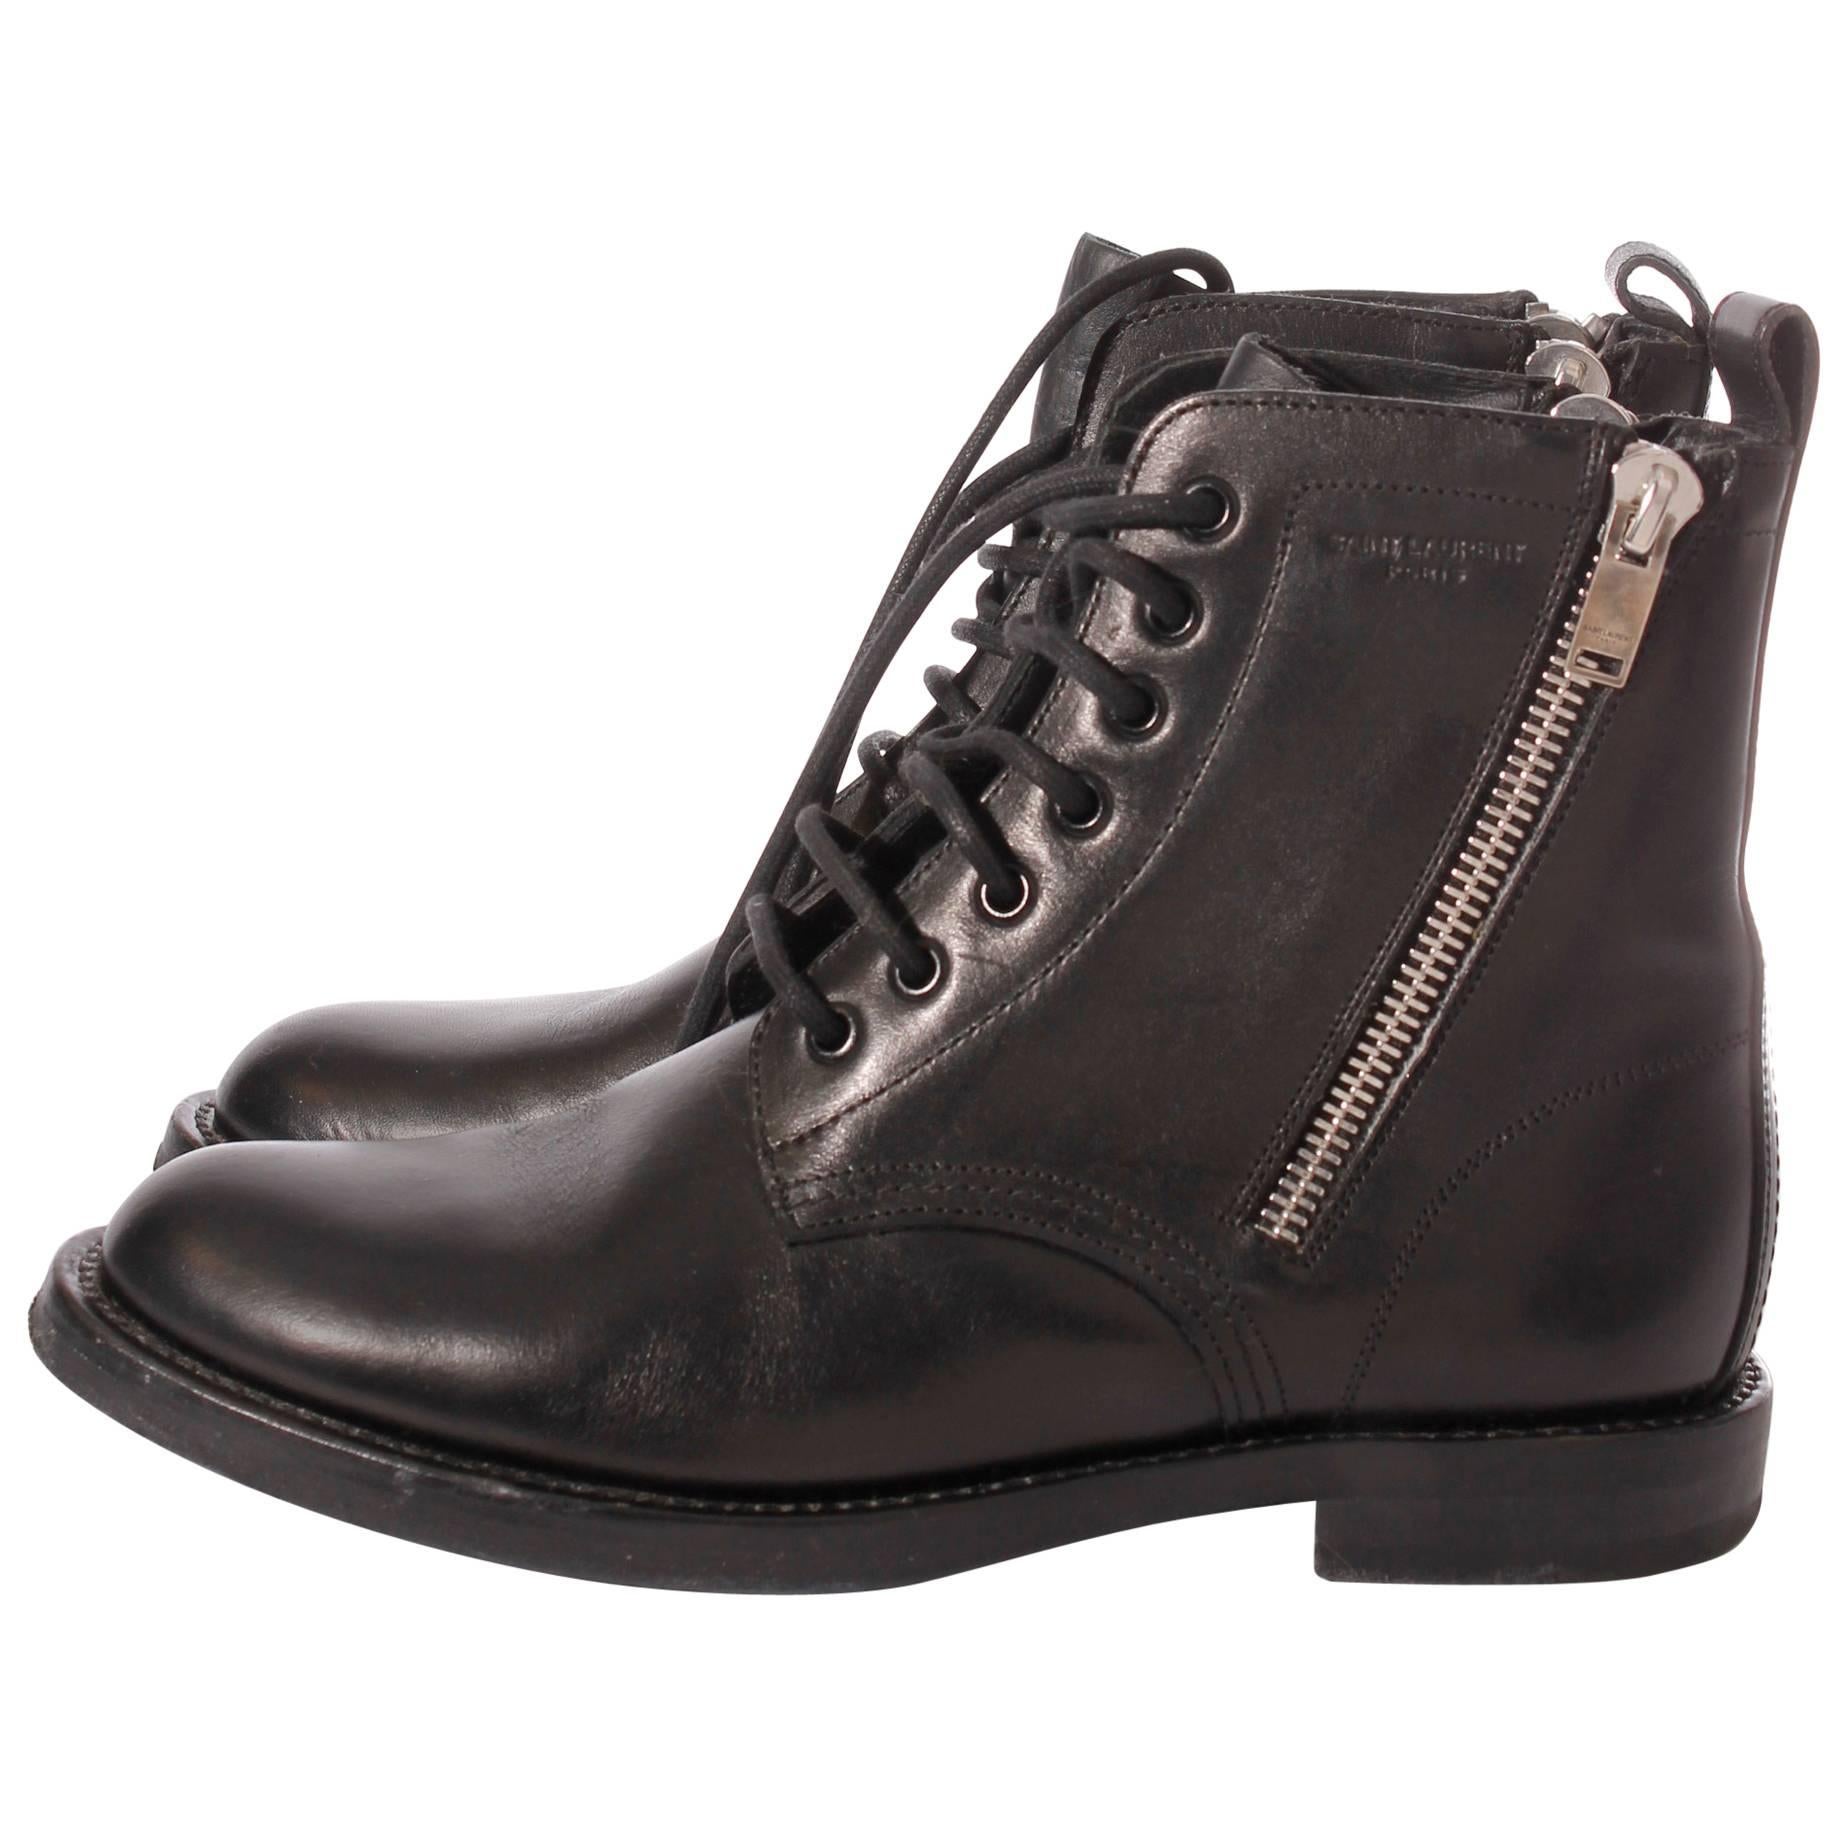 Saint Laurent Ranger Combat Zip Boots - black leather